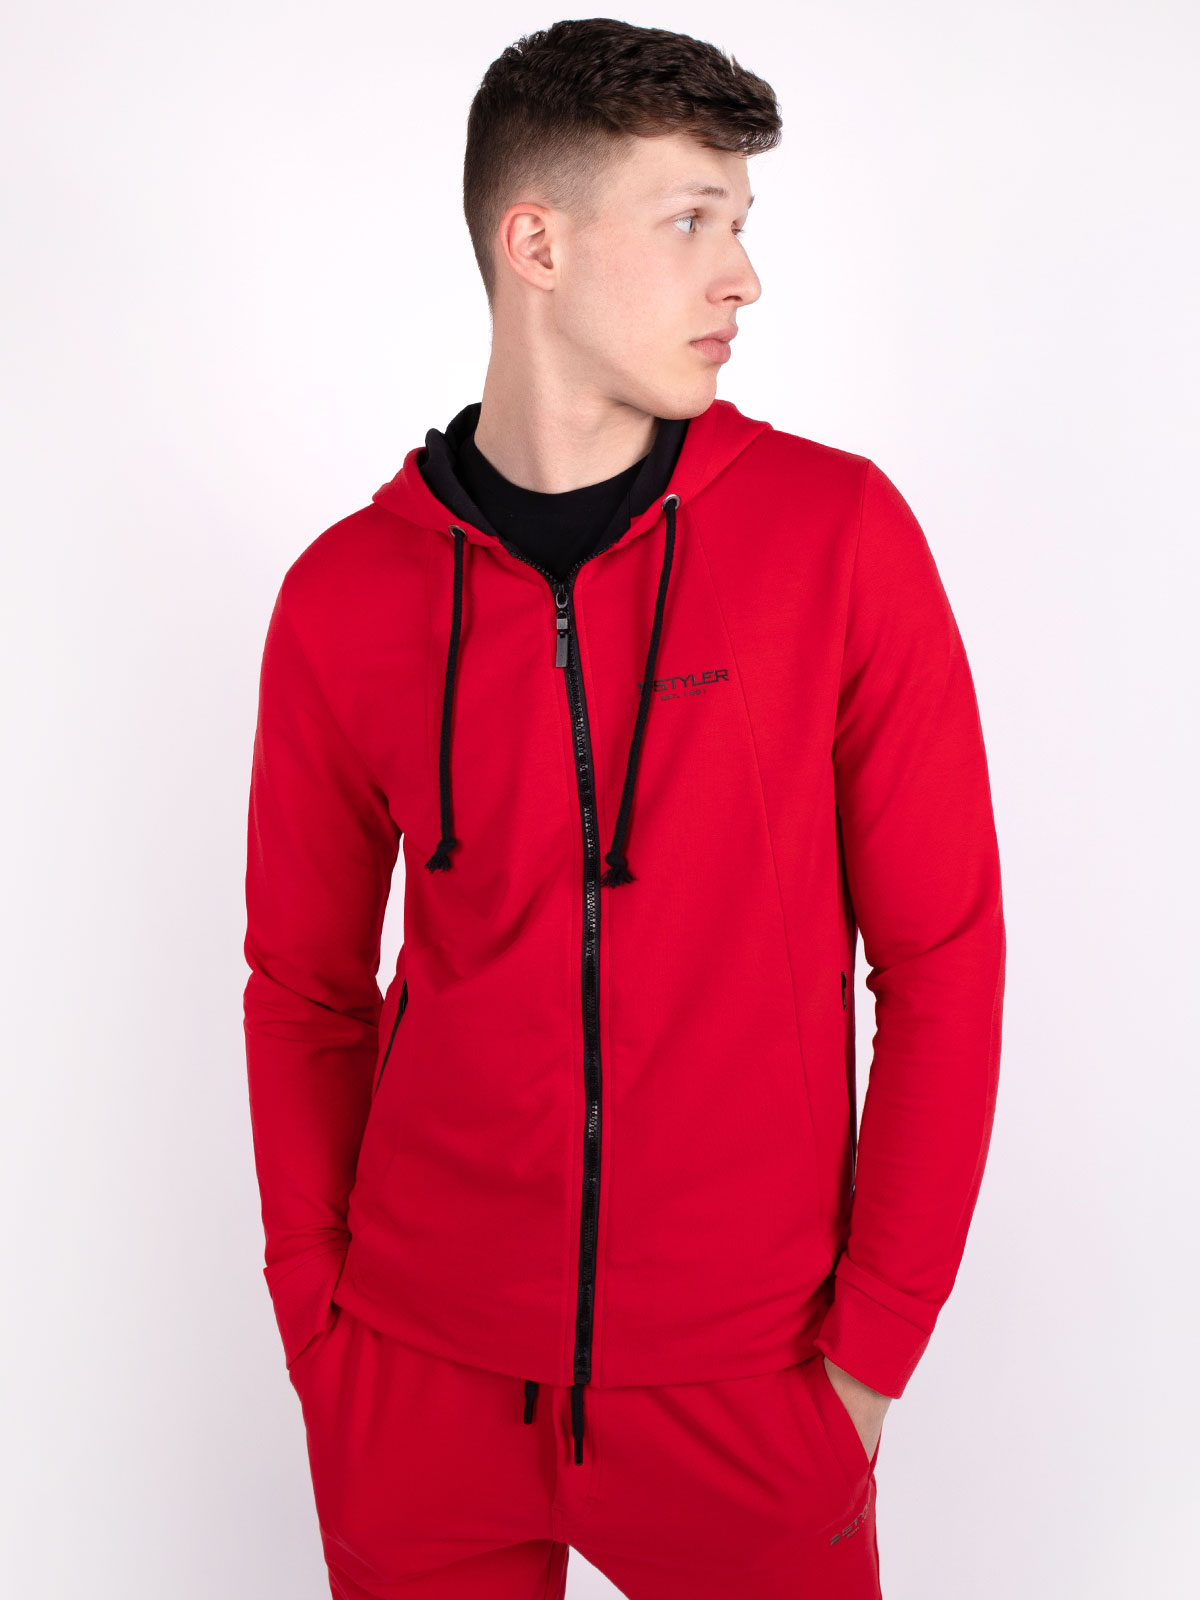 Sport sweatshirt in red with hood - 28090 € 27.56 img2